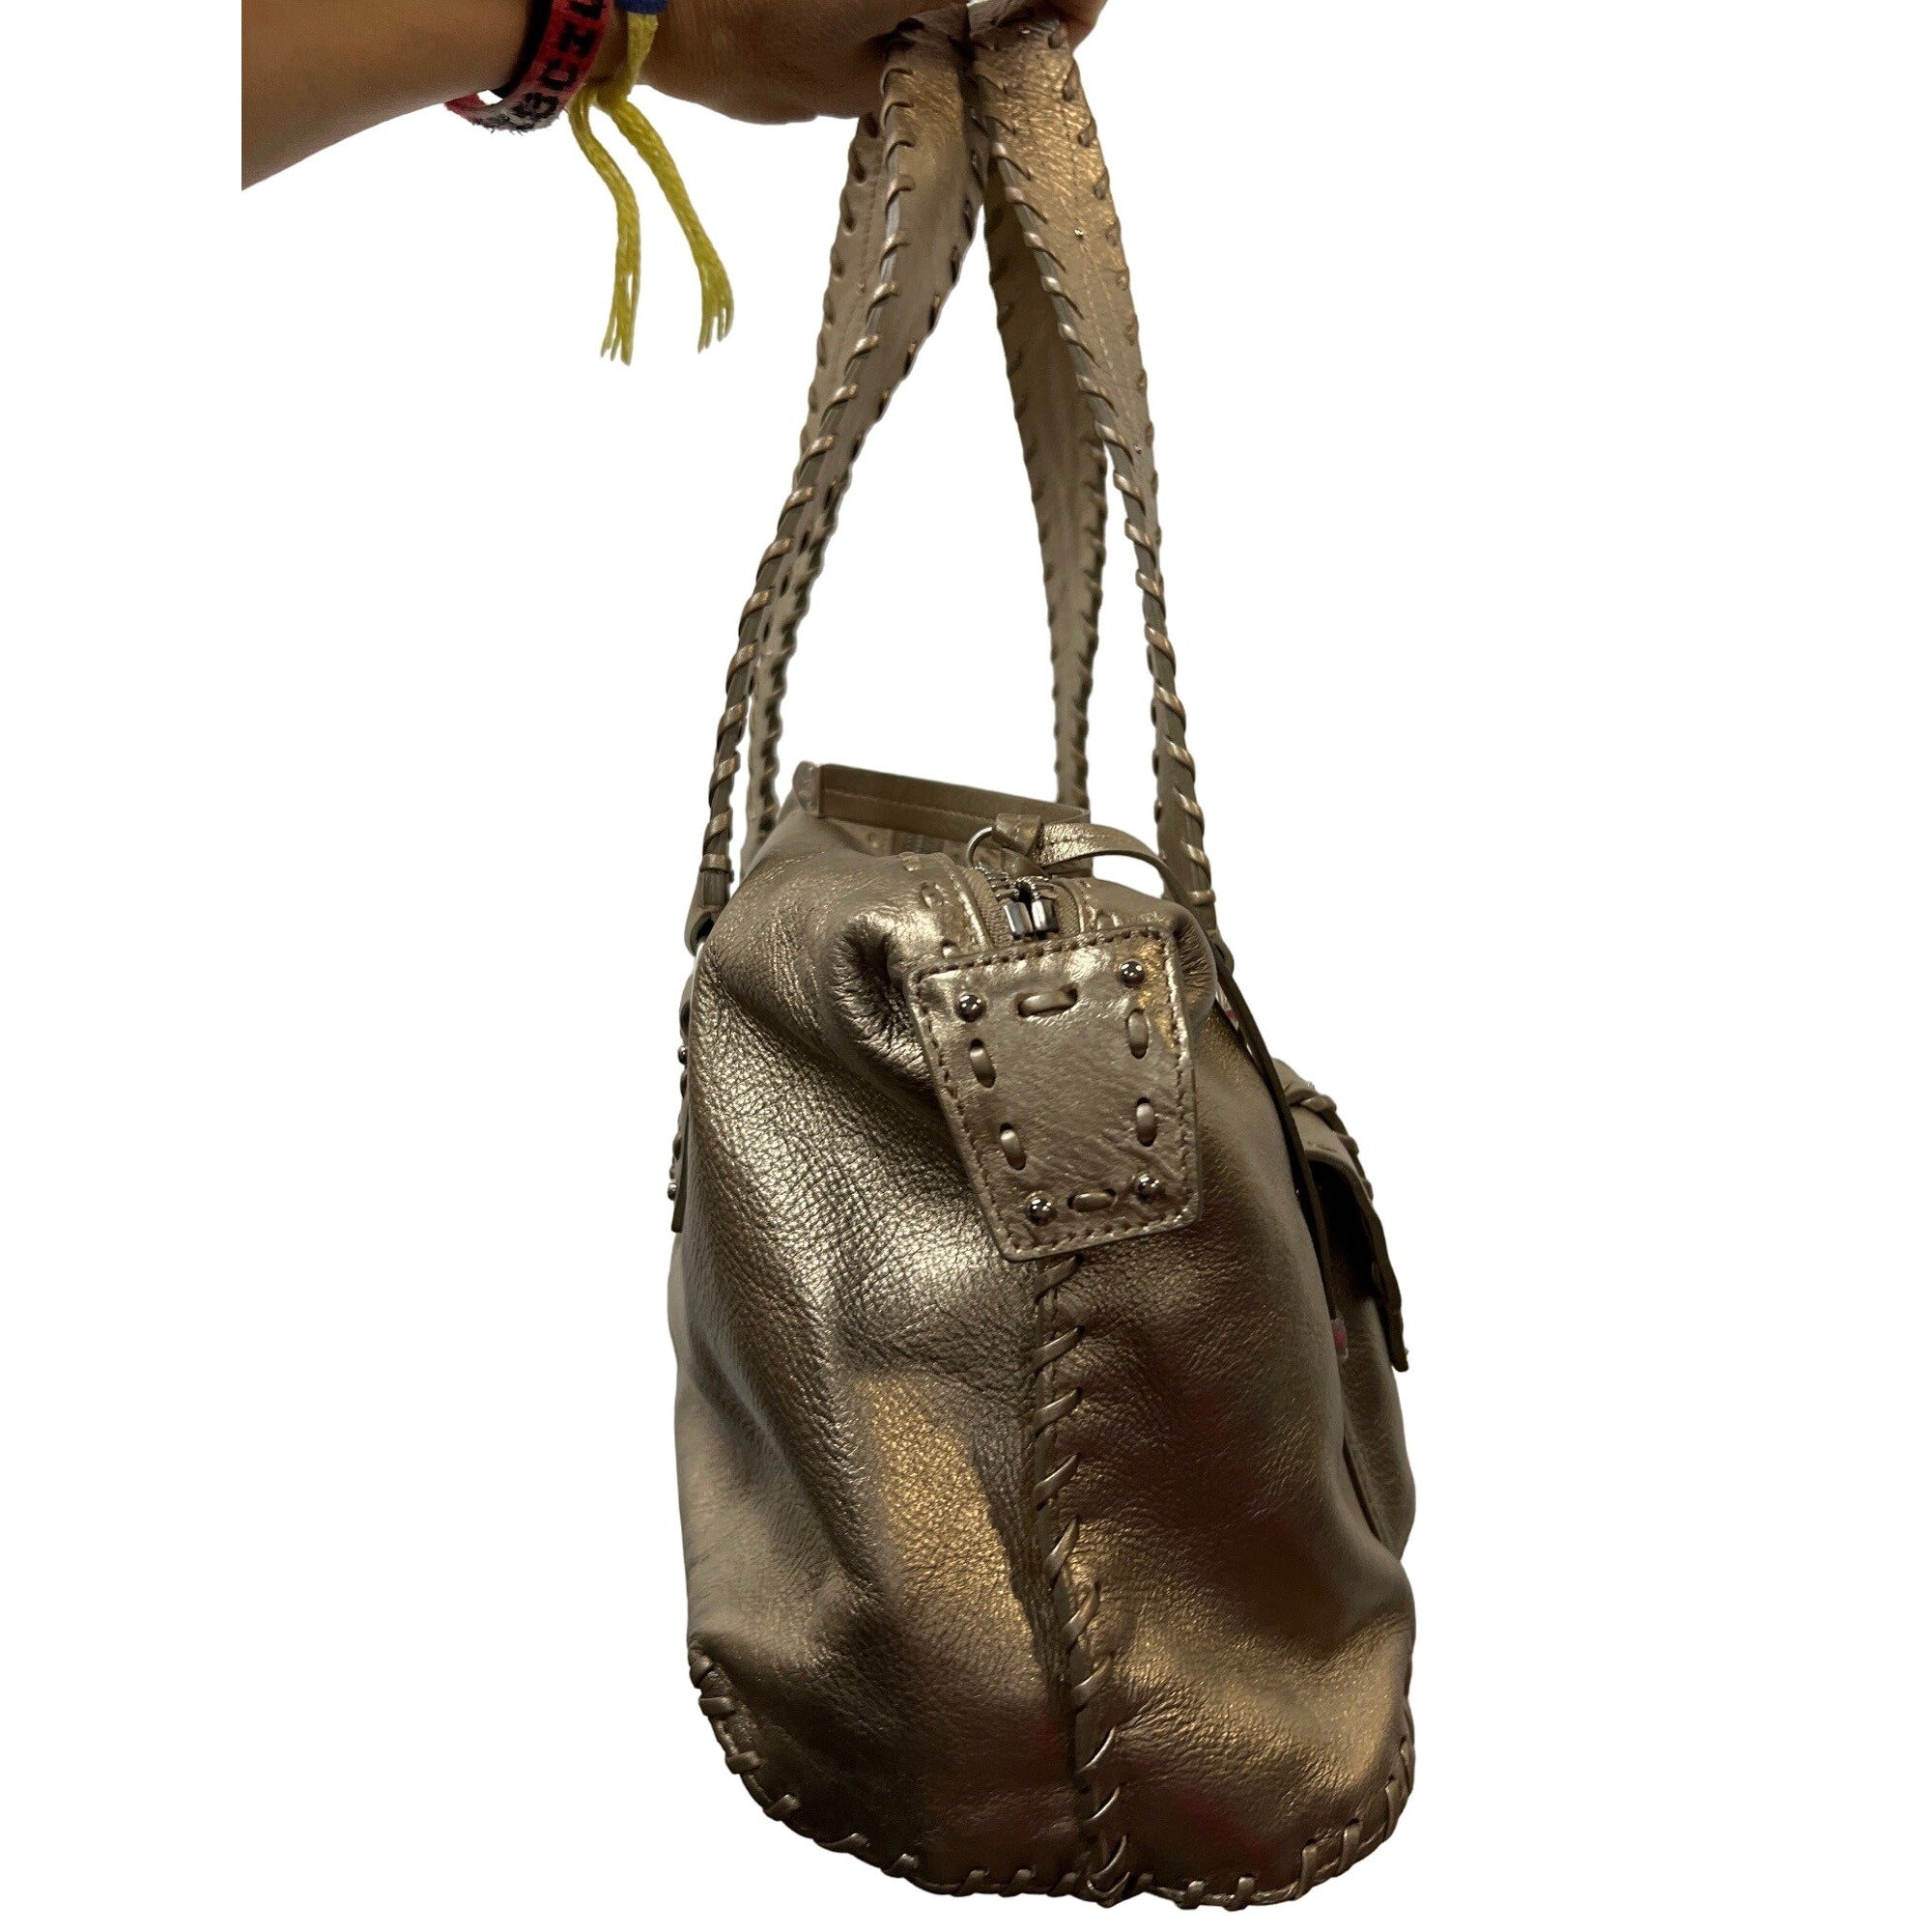 Michael Kors Golden Metallic Leather bag